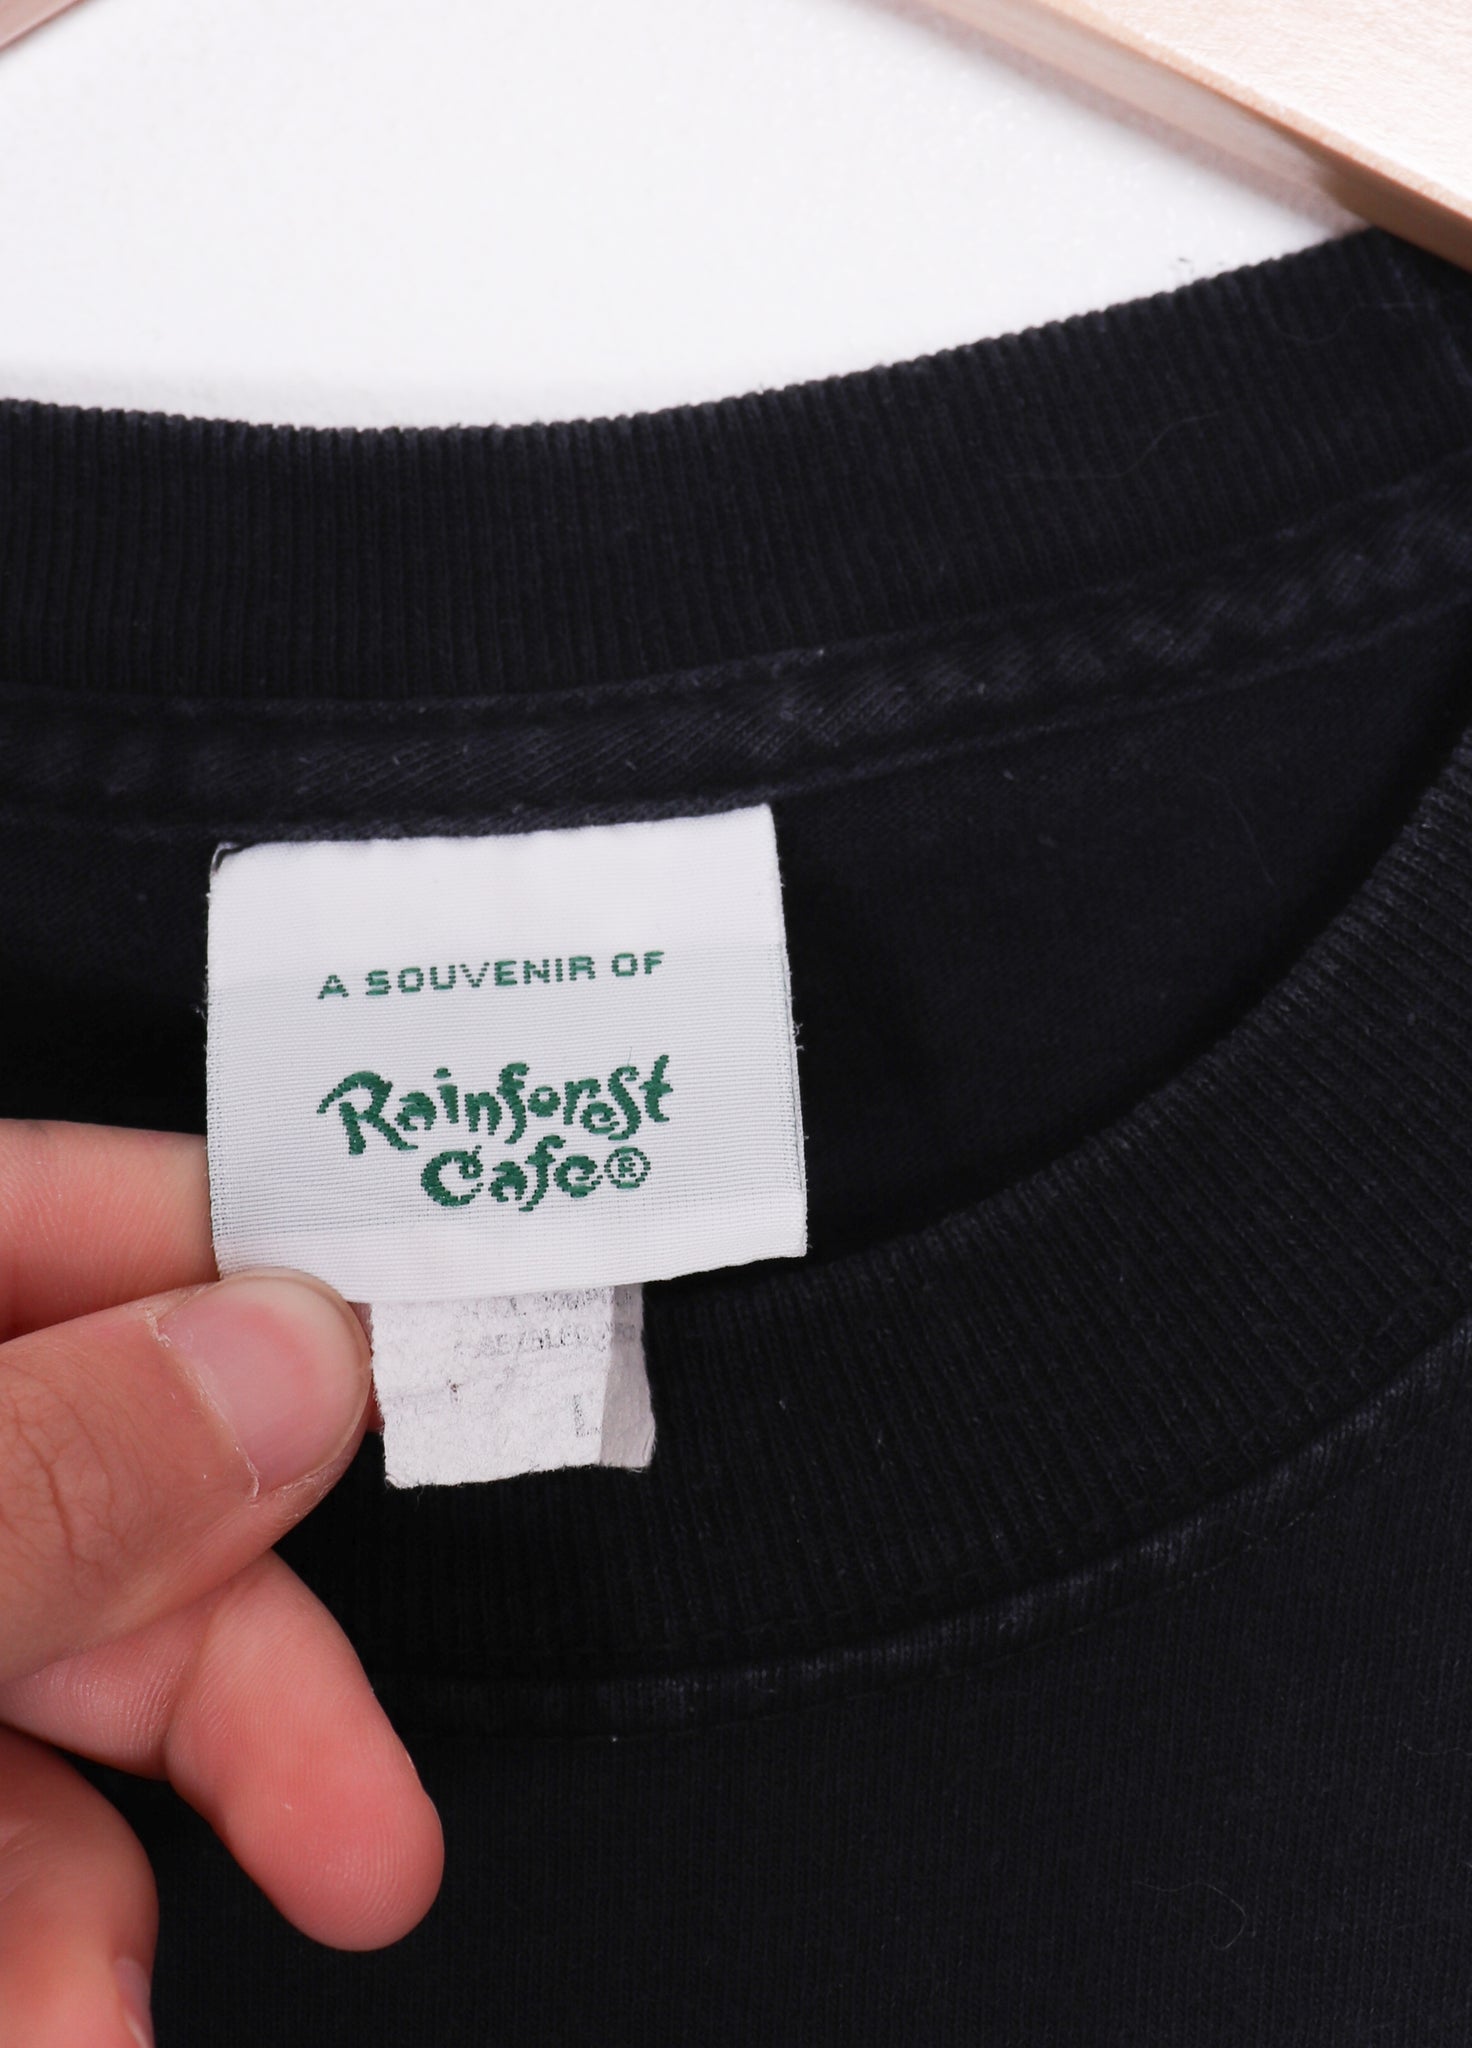 90s Rainforest Cafe Souvenir Tiger T-Shirt